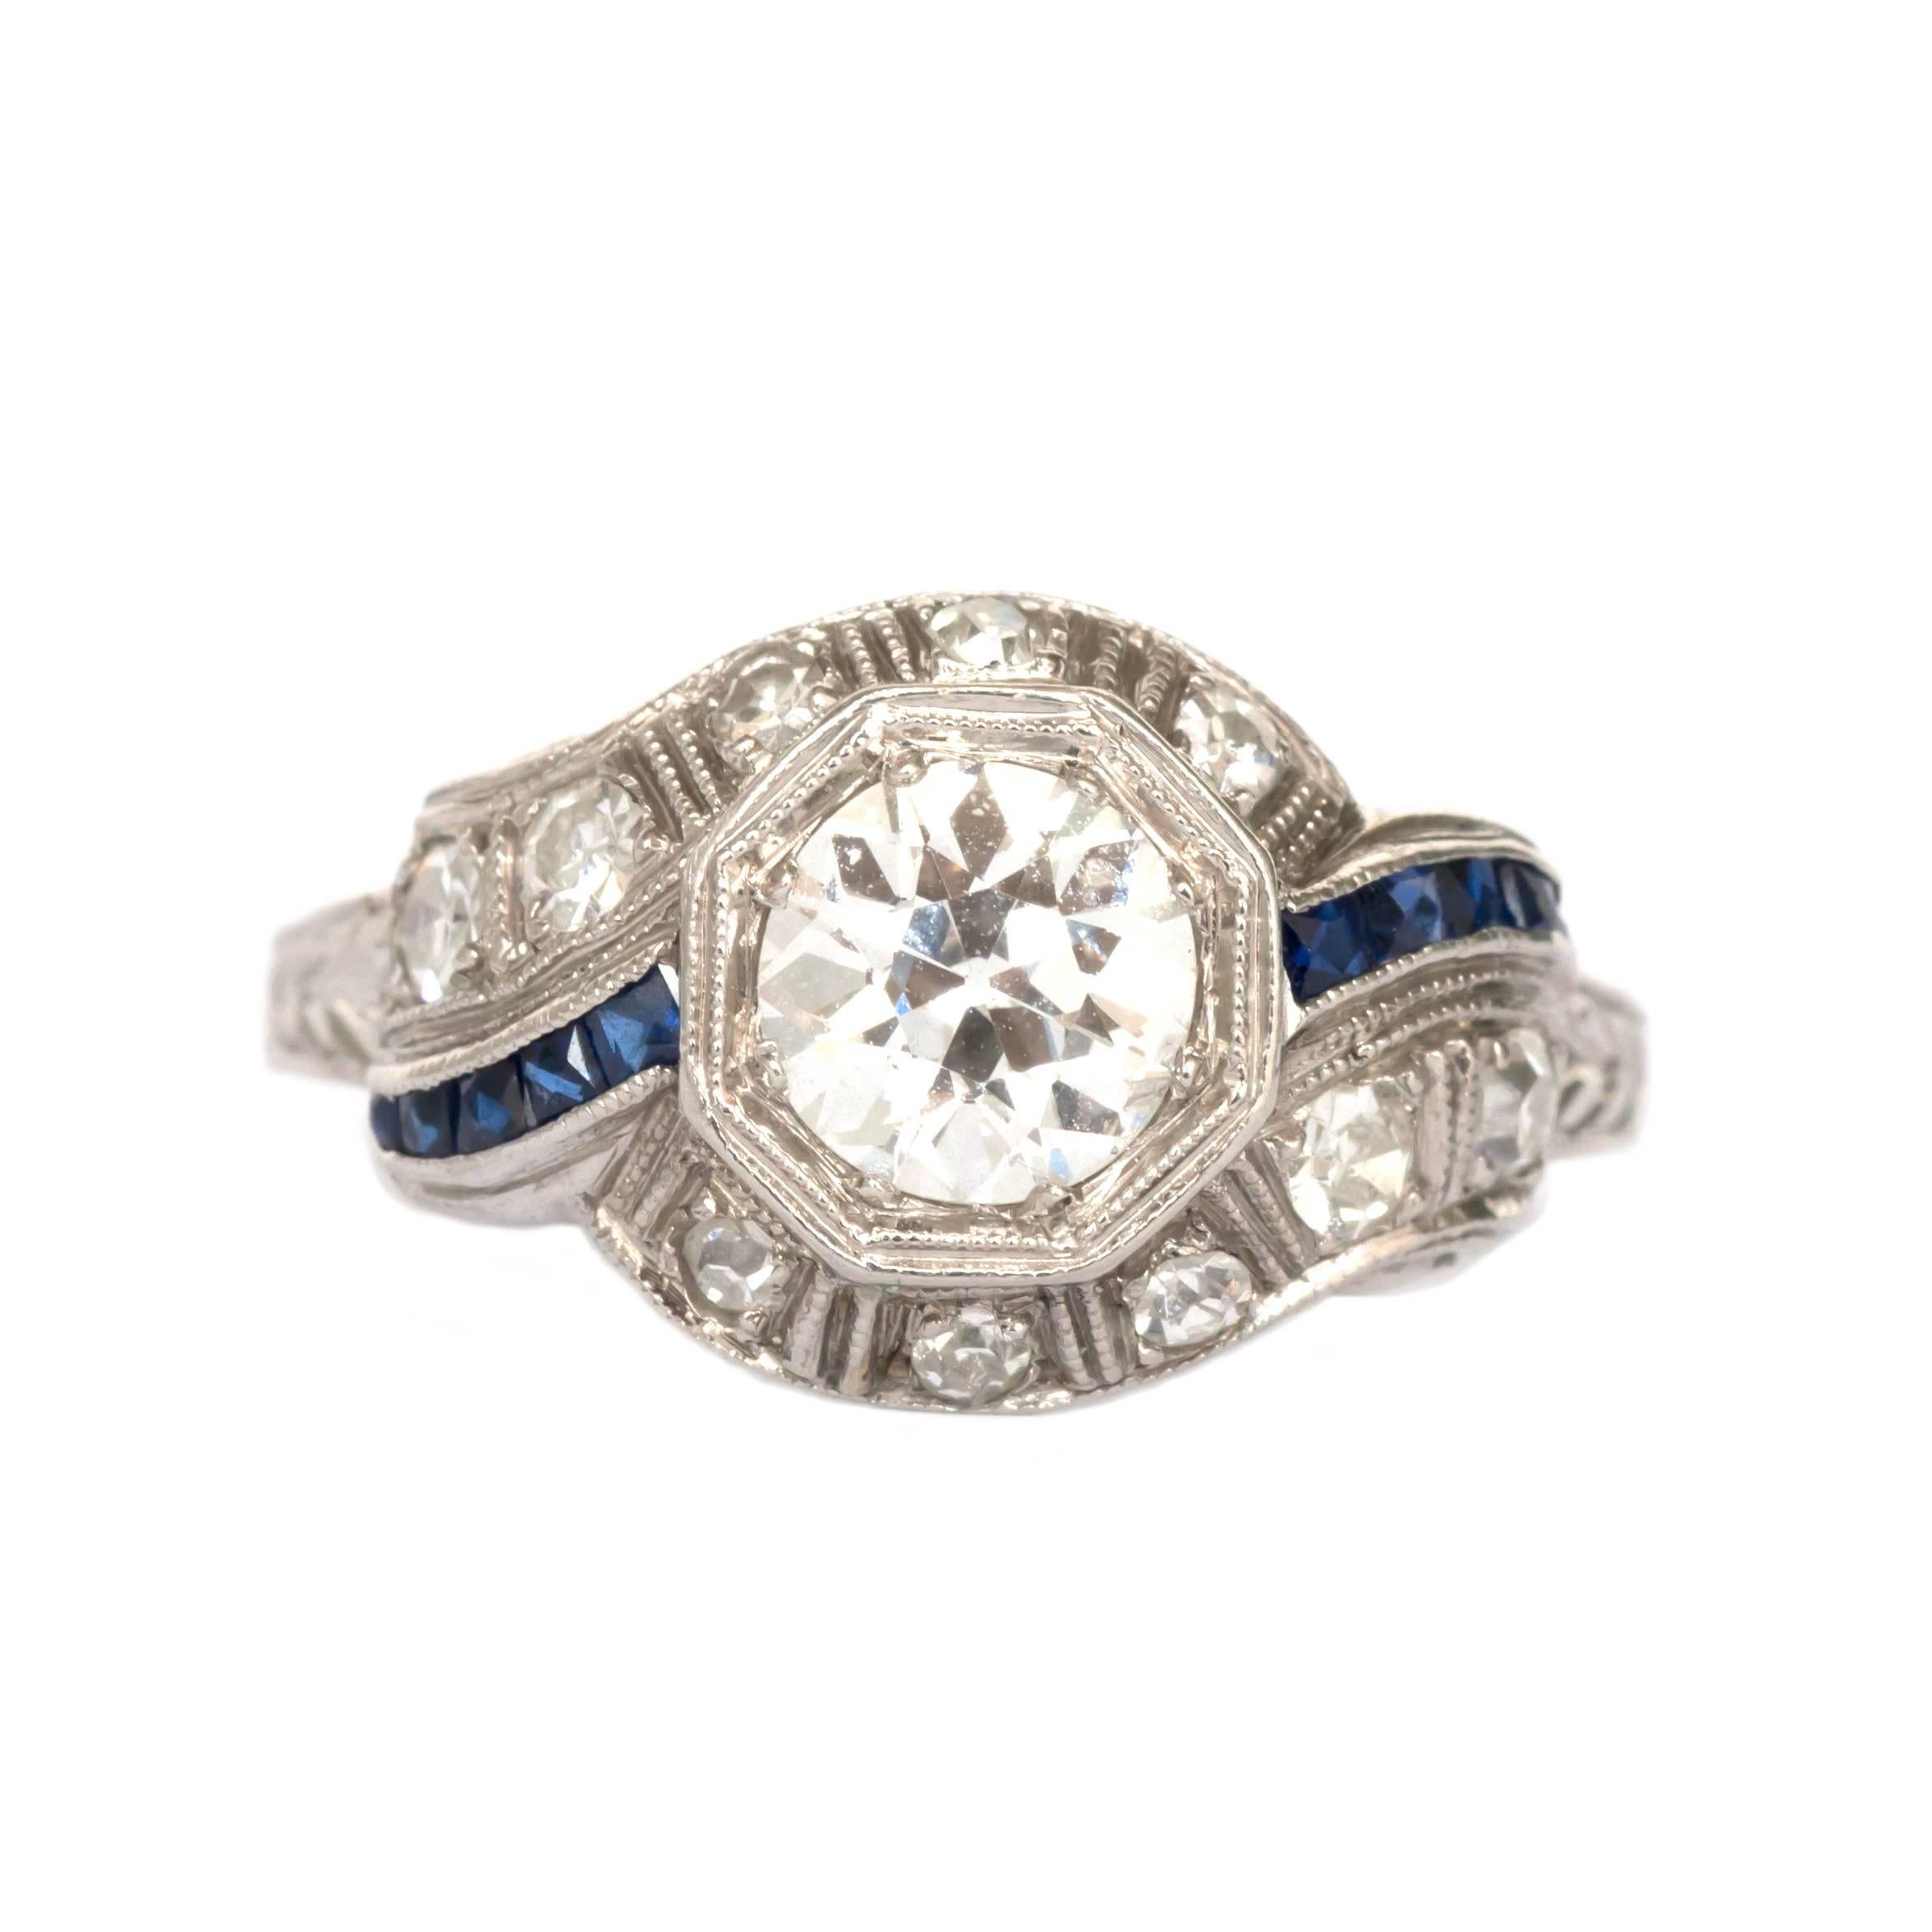 .75 Carat Diamond Platinum Diamond Engagement Ring